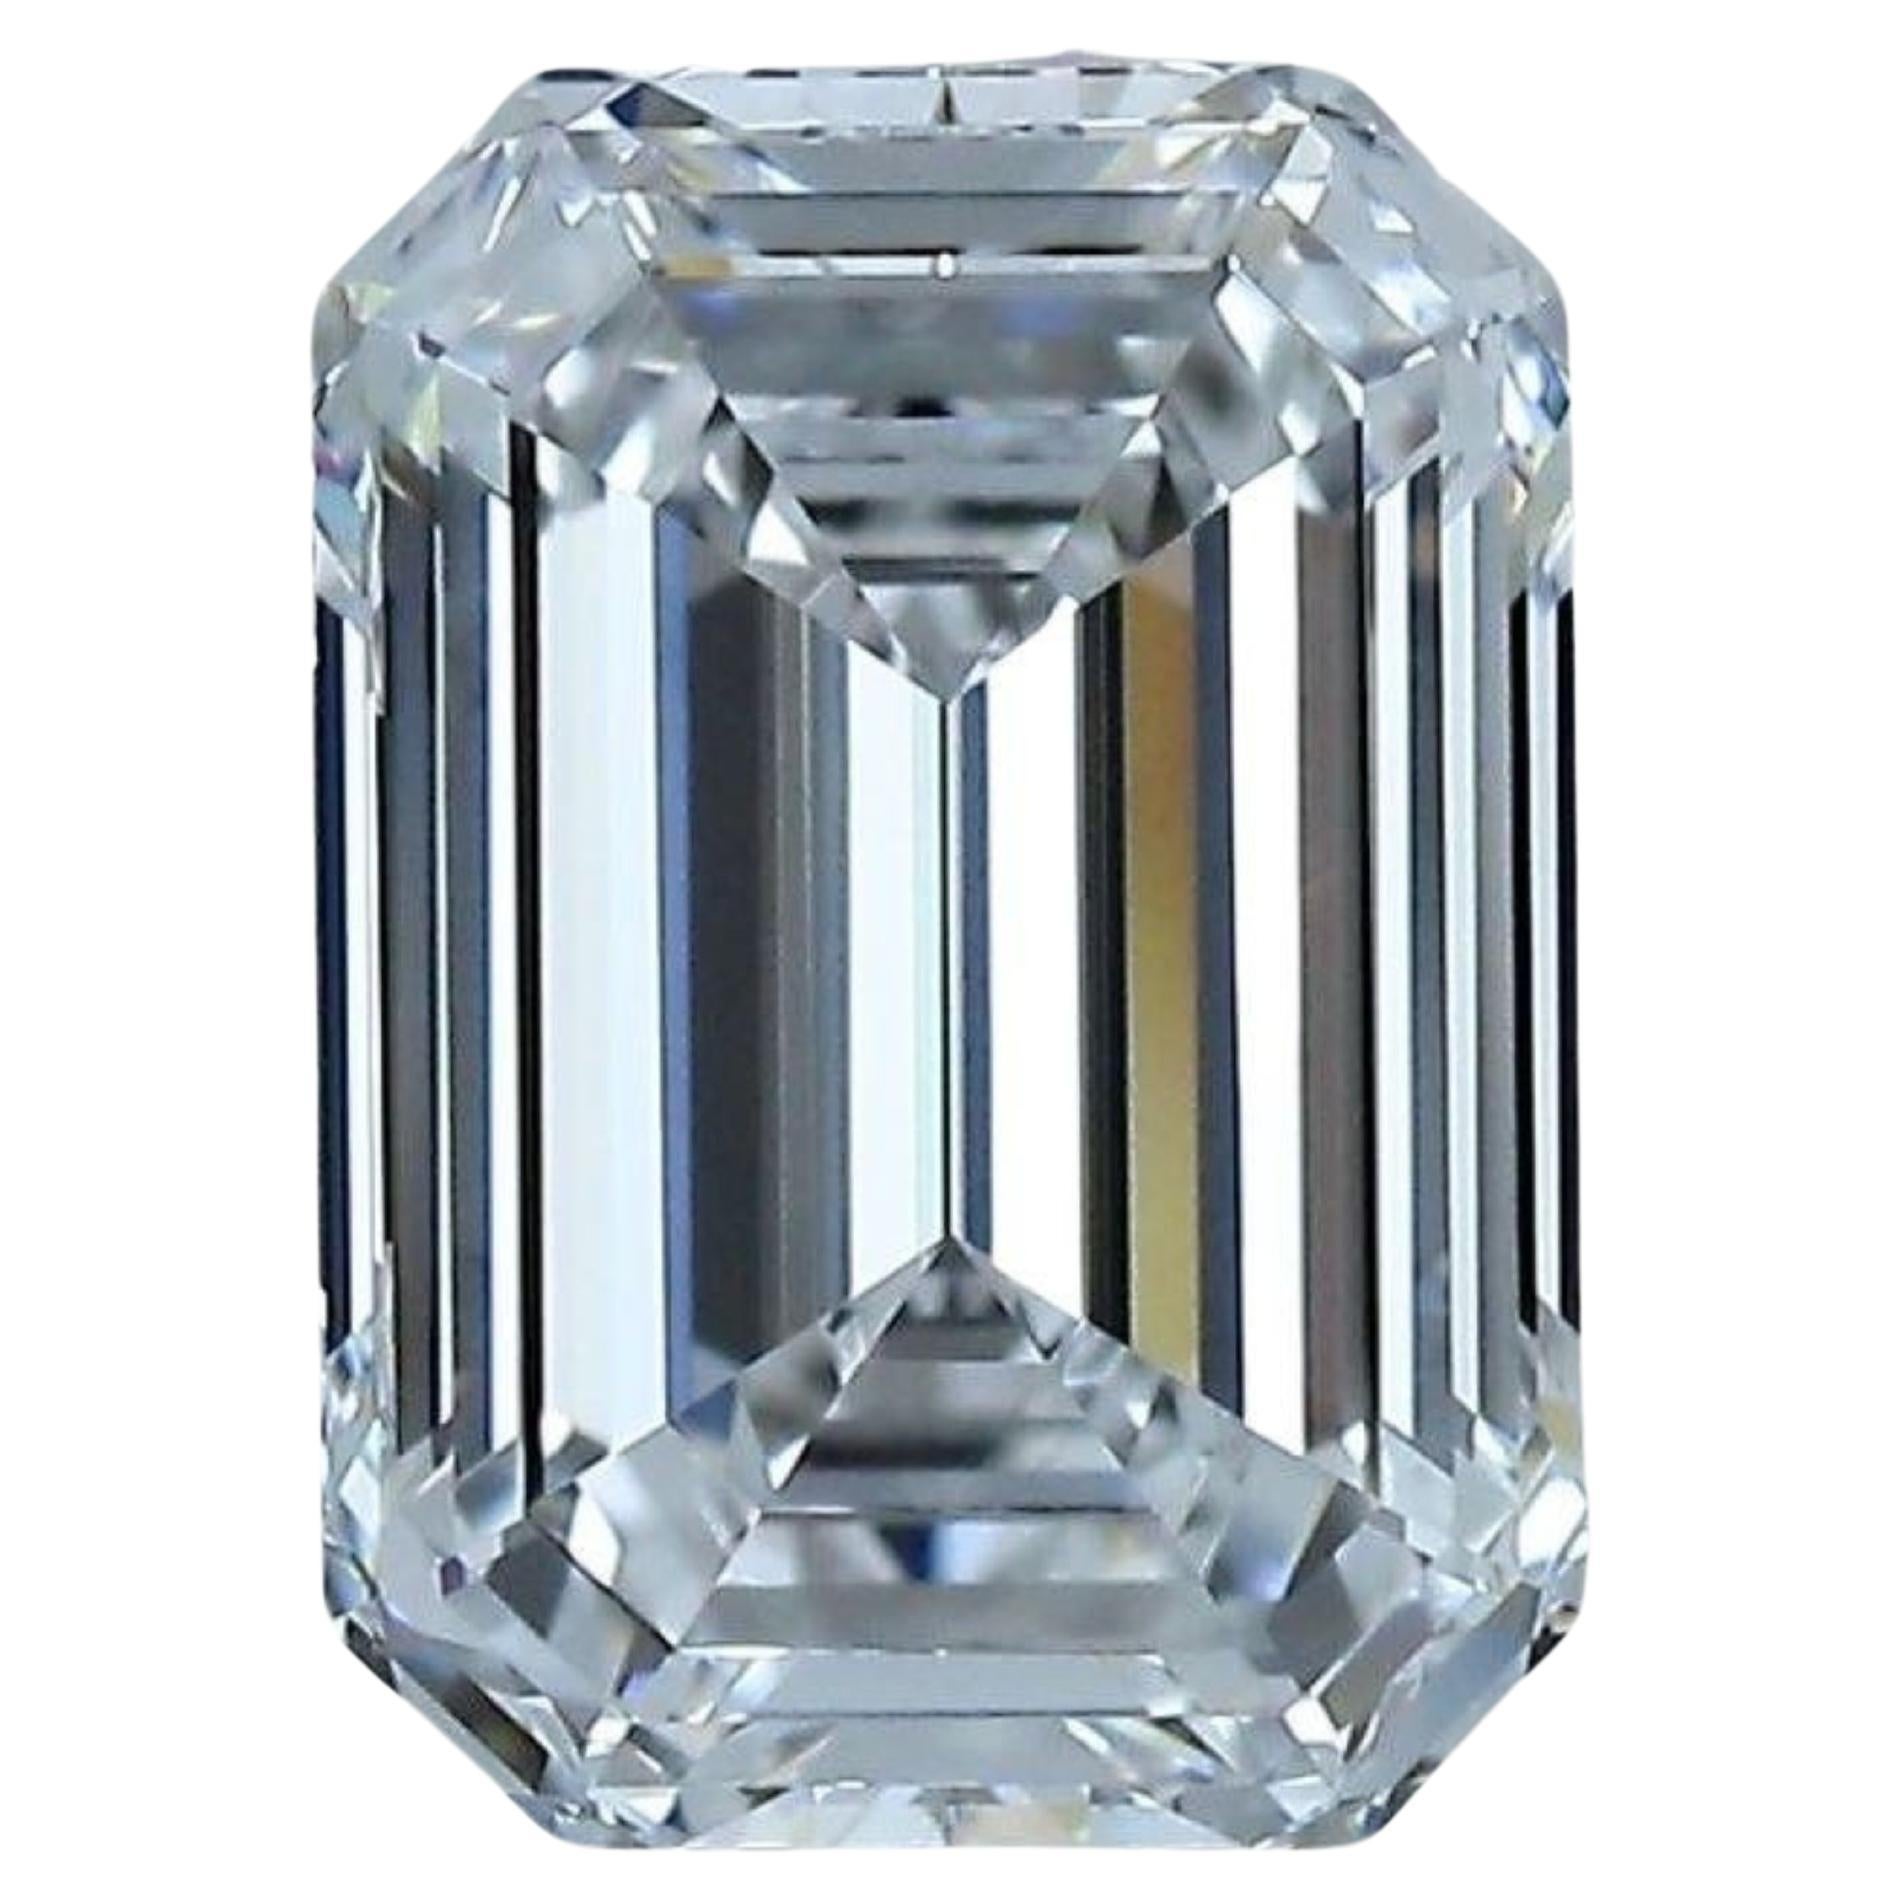 1pc. Shimmering 2.44 Carat Emerald Cut Natural Diamond